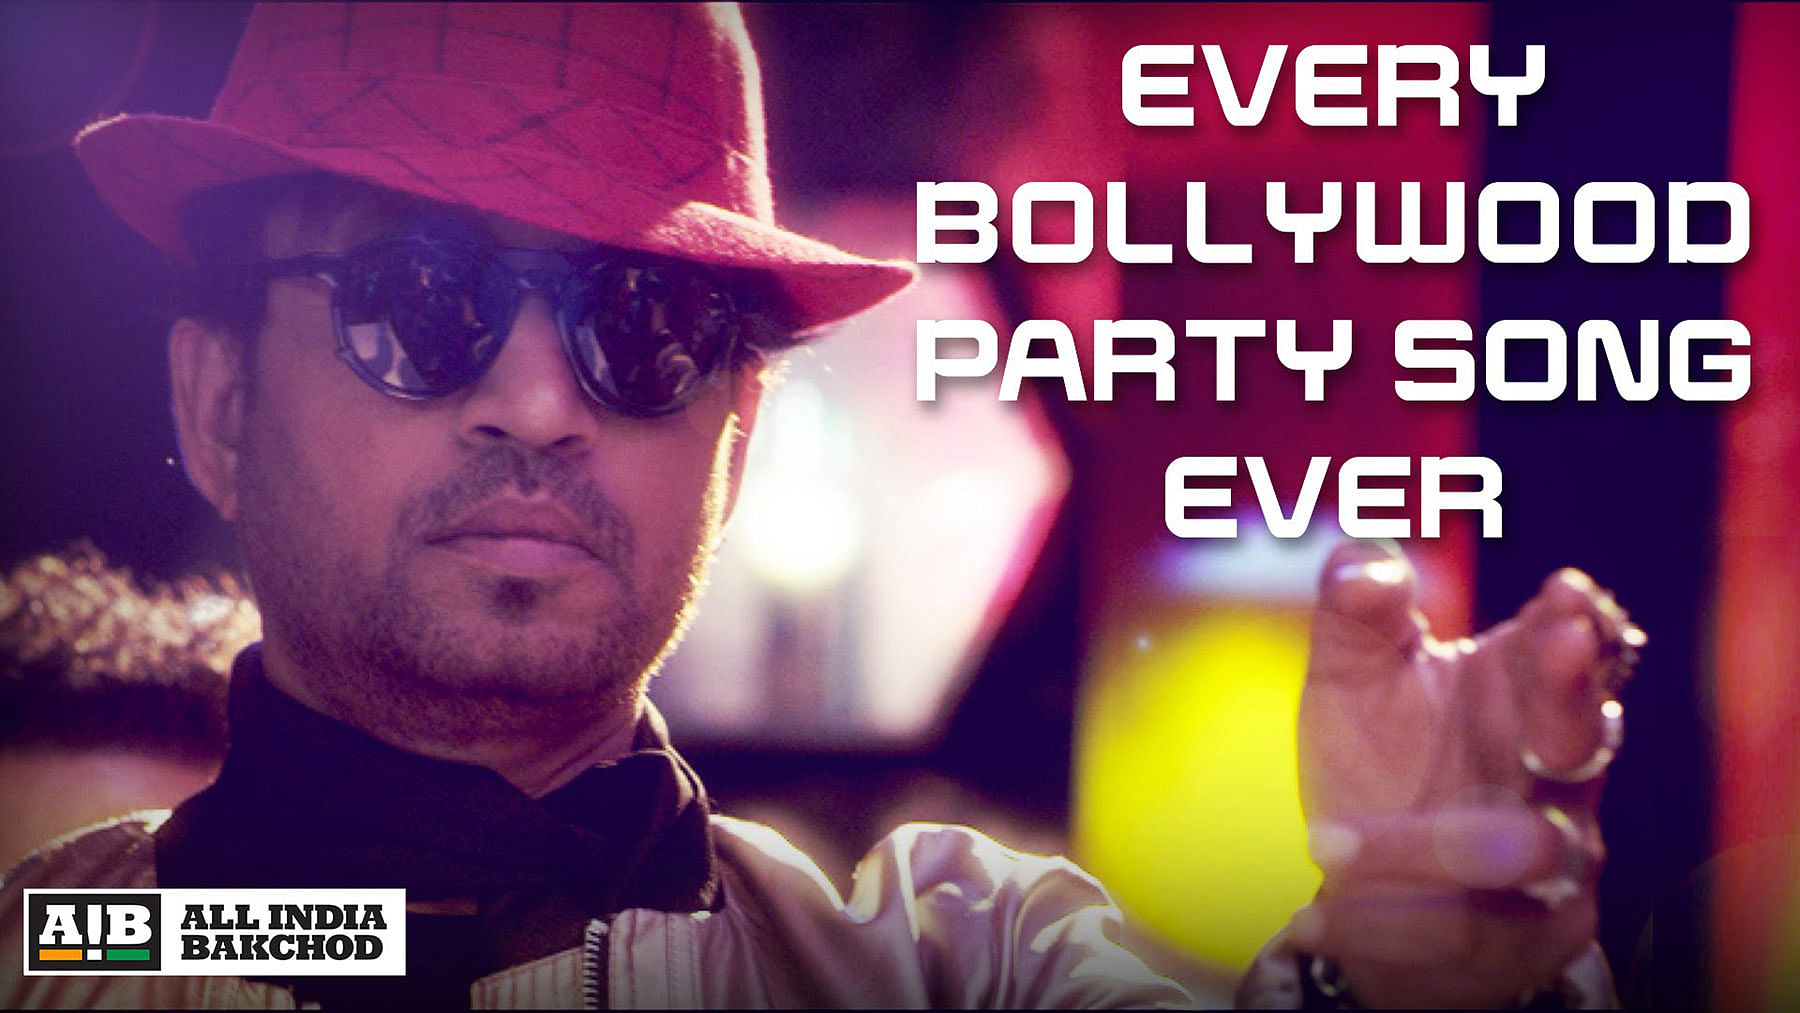 A screengrab of AIB’s <i>Every Bollywood Party Song</i> . (Photo: <a href="https://www.youtube.com/watch?v=r3nhttUMhrI">Youtube/AIB</a>)